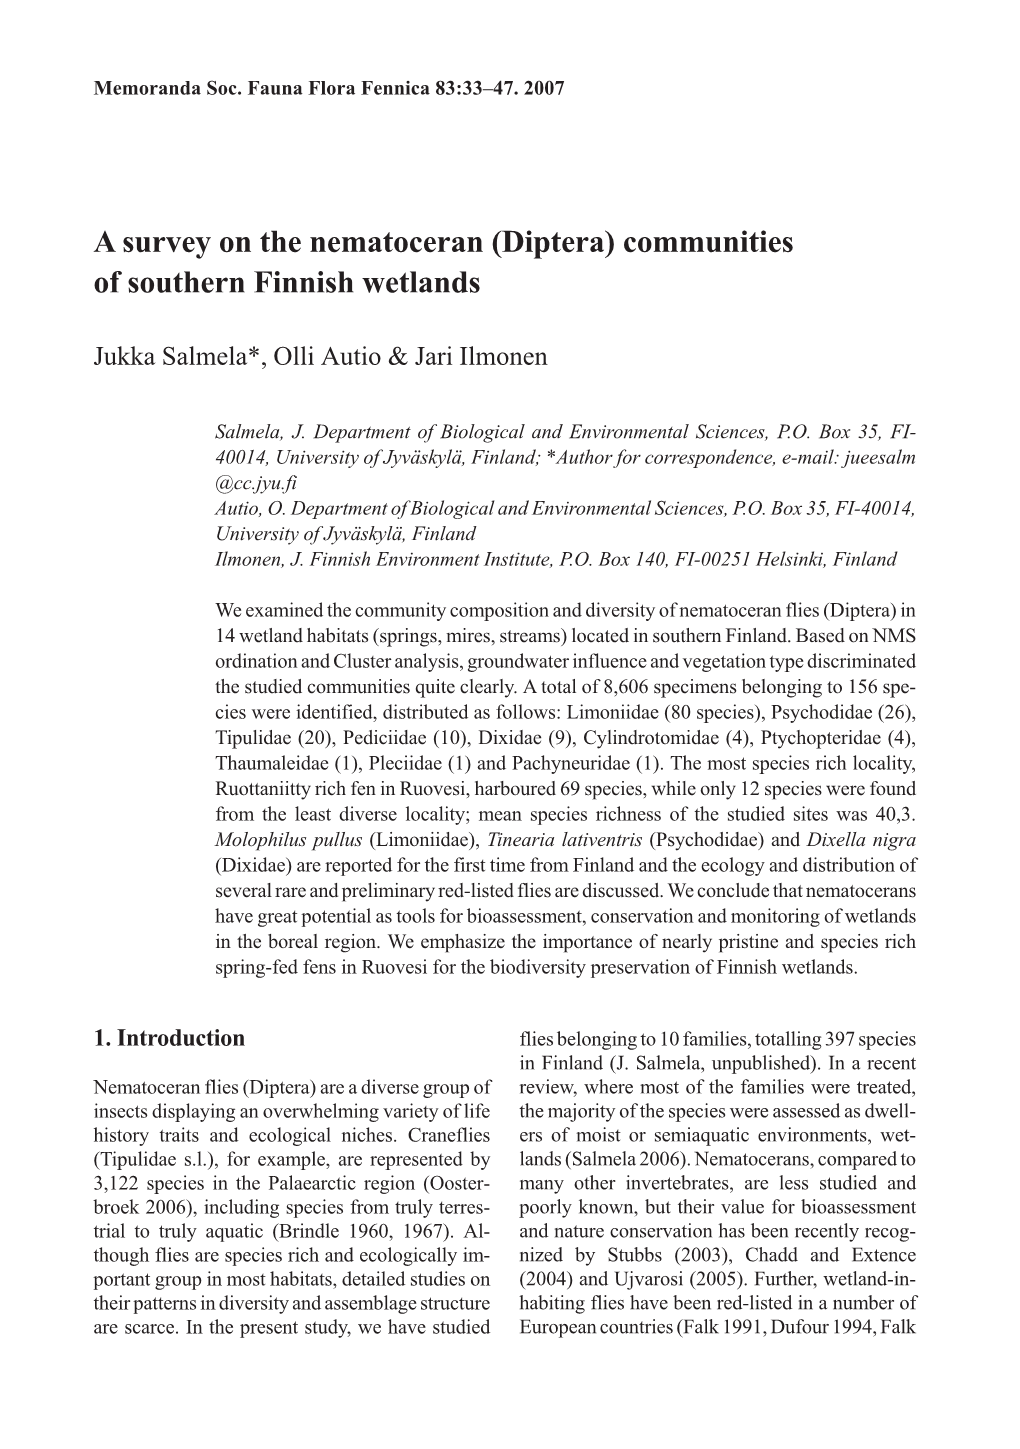 A Survey on the Nematoceran (Diptera) Communities of Southern Finnish Wetlands